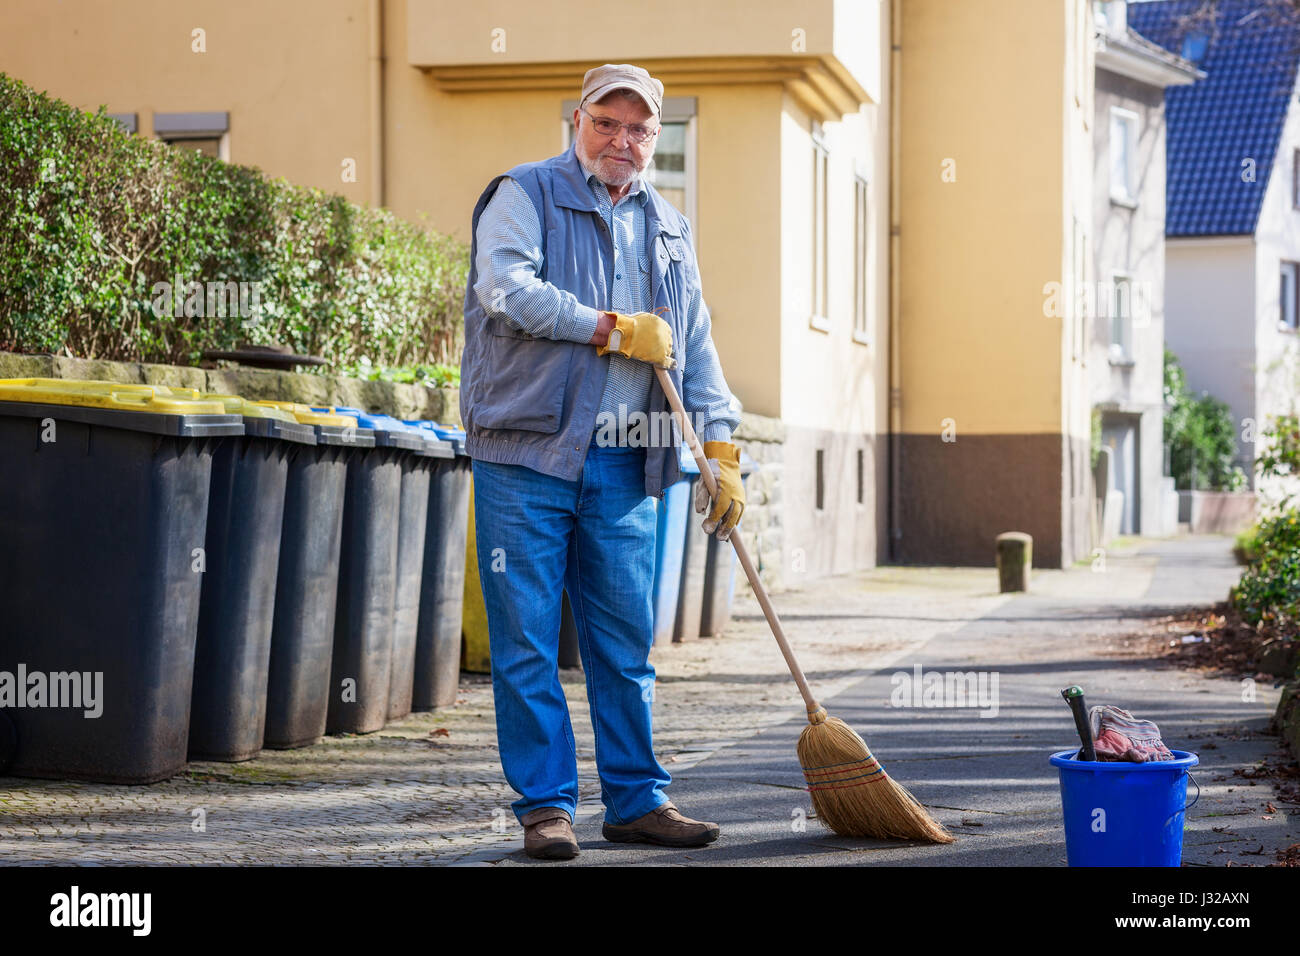 Elderly senior man with broom sweeping sidewalk on sunny day Stock Photo